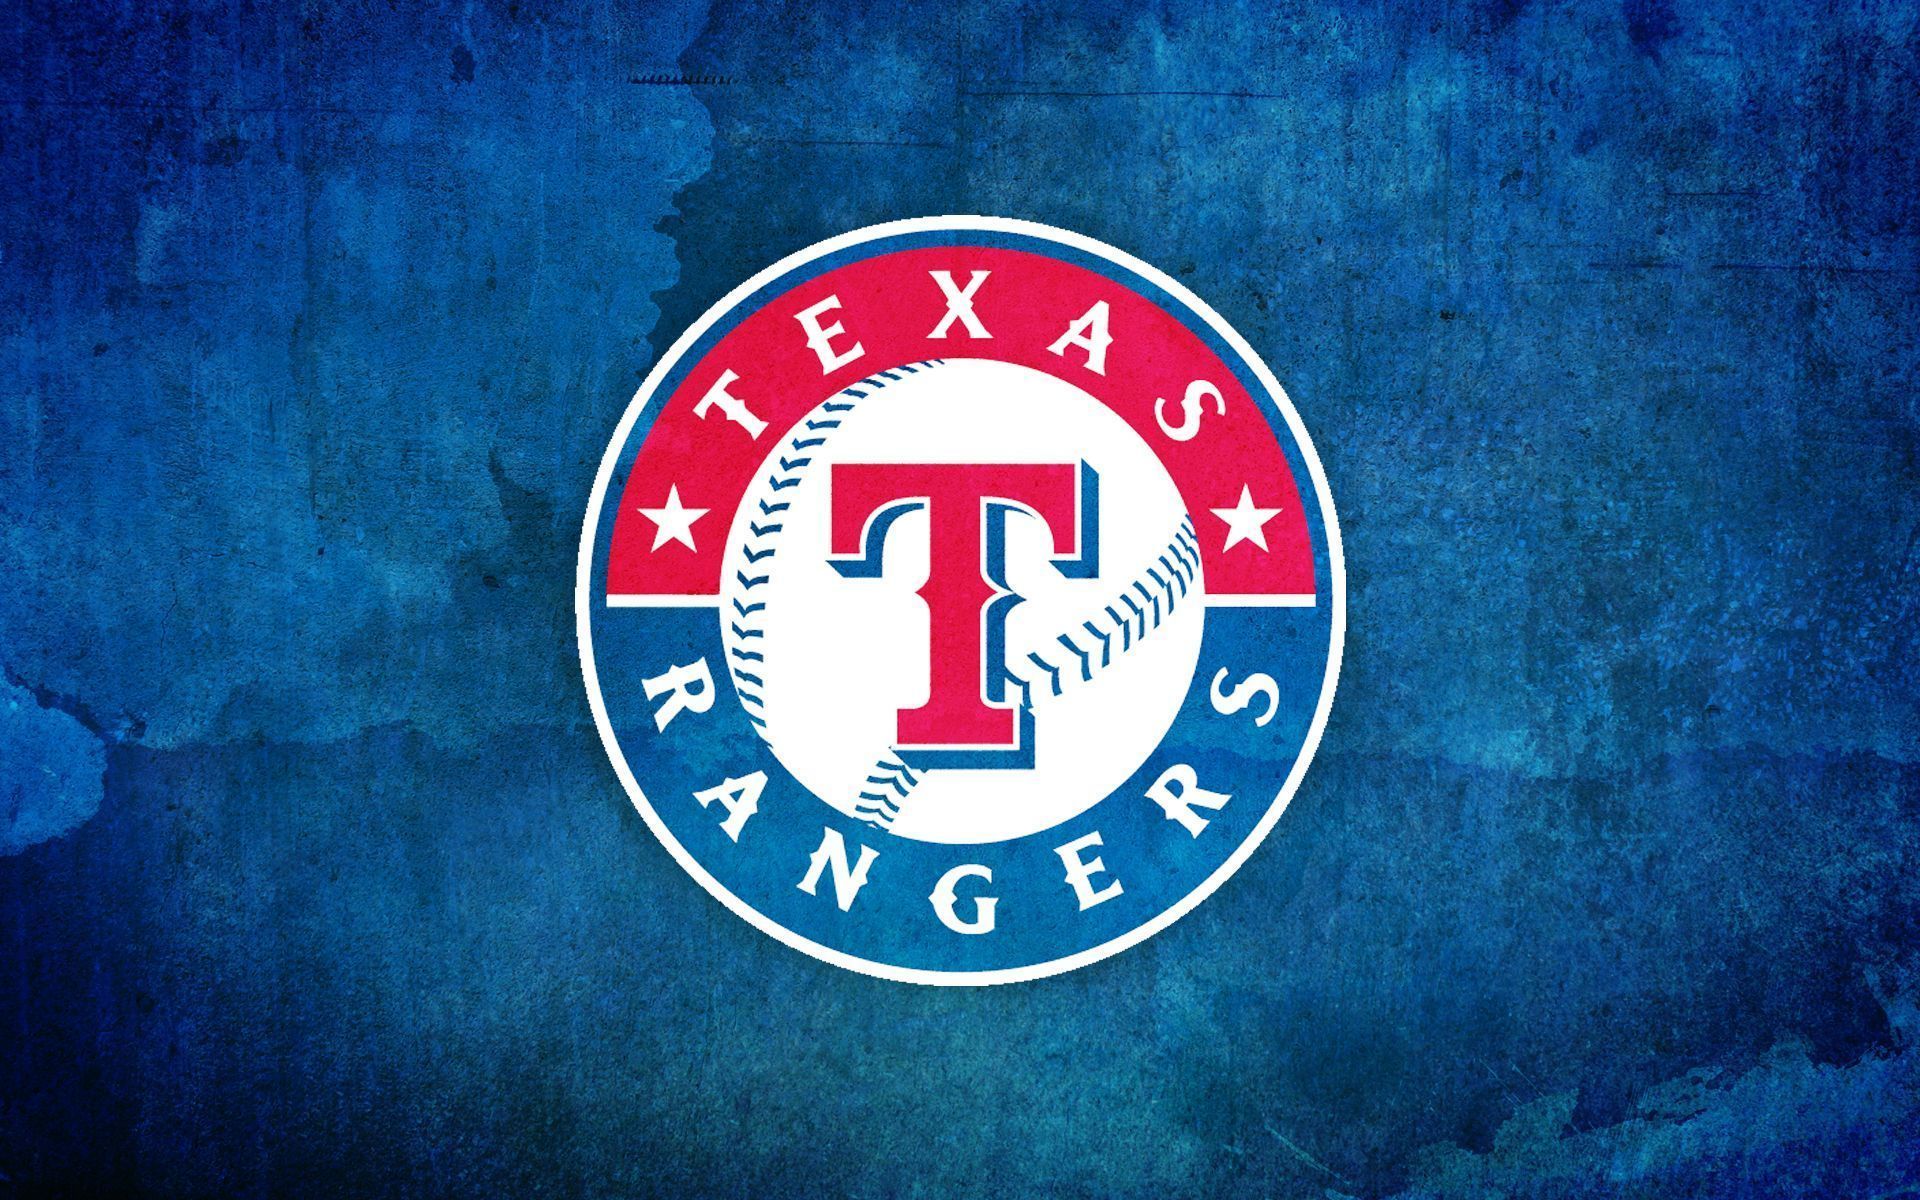 Texas Rangers HD Backgrounds